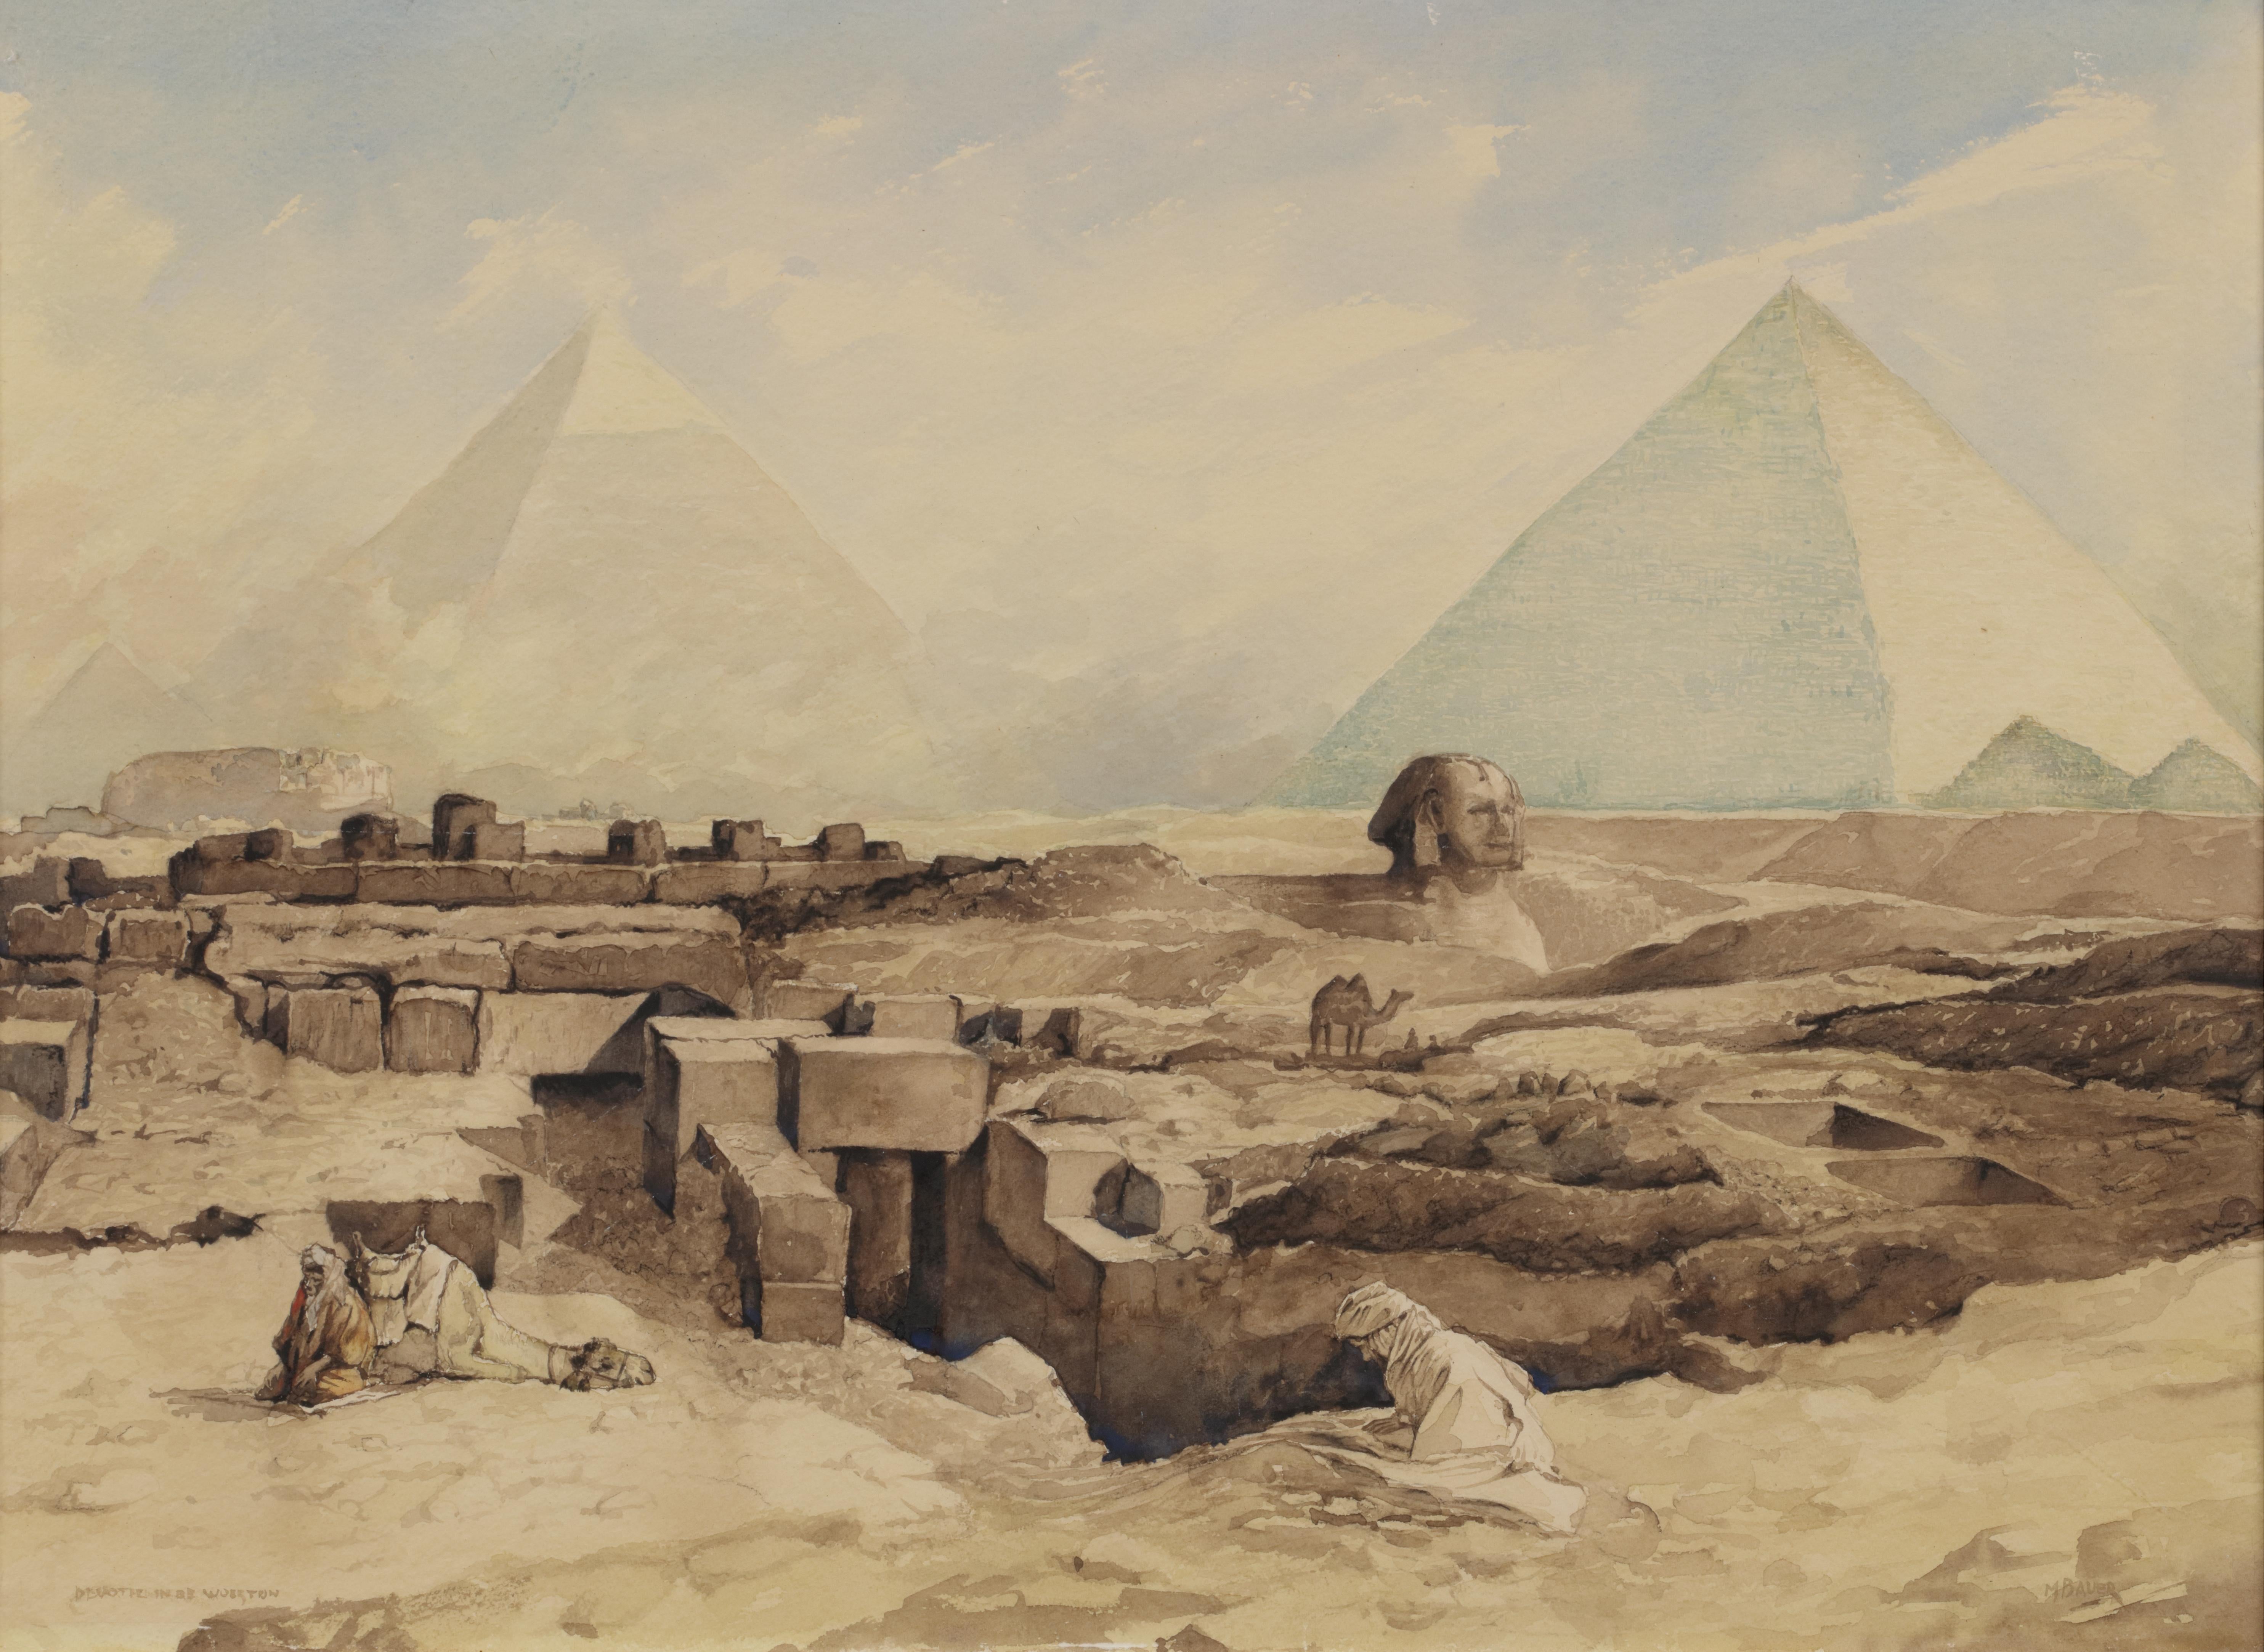 Marius Bauer Landscape Art - Devotion in the Dessert near the pyramids of Gizeh, circa 1919